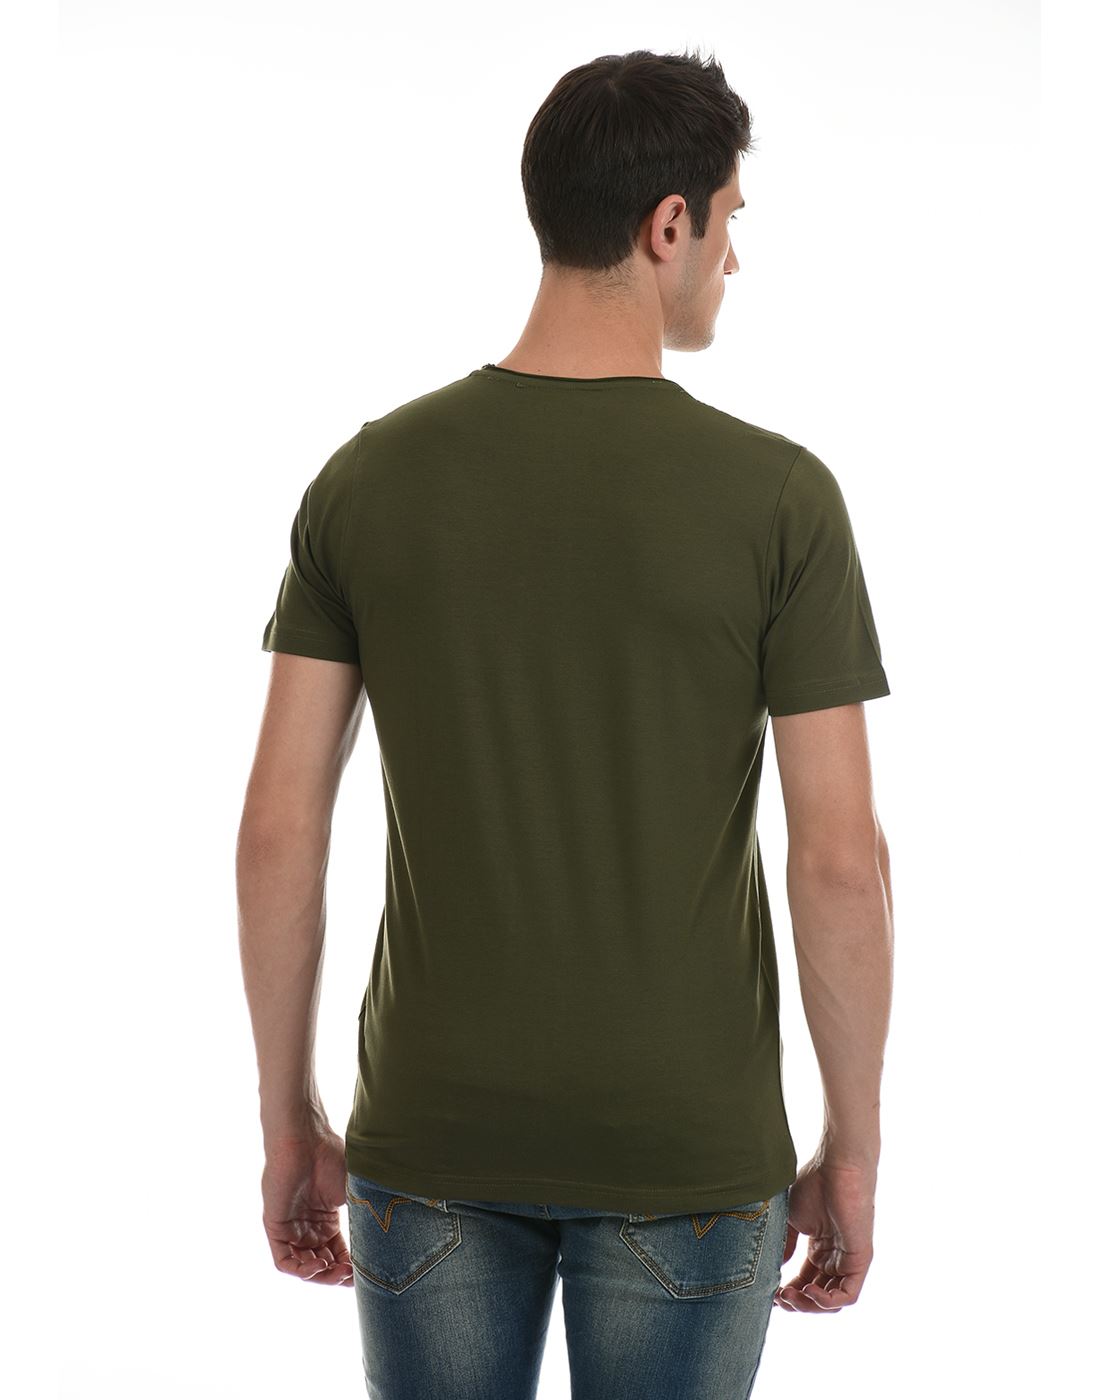 Apocalypse Men Casual Wear Olive Green T-Shirt